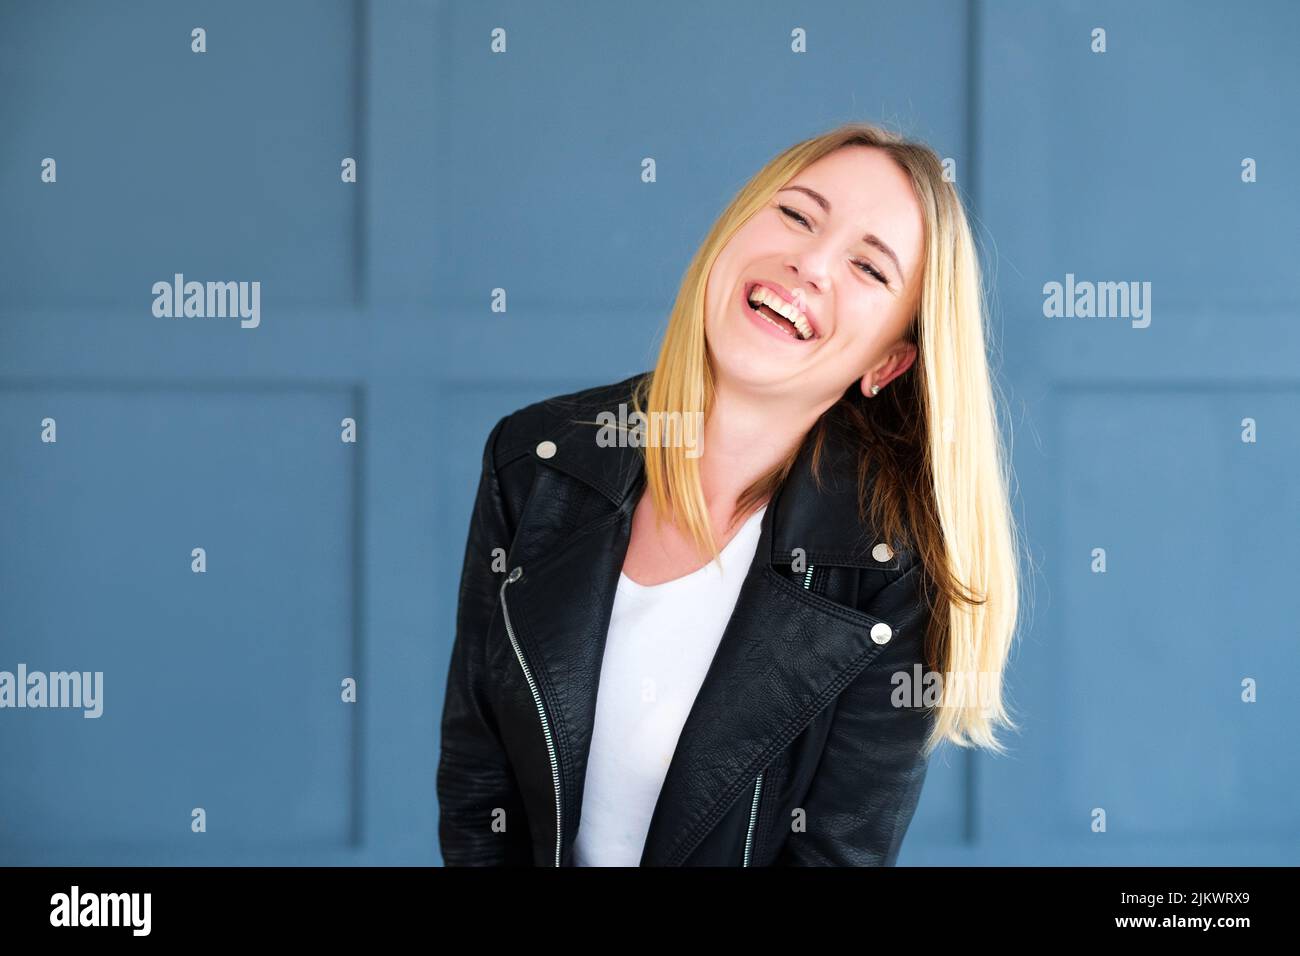 happy smiling joyful delighted woman emotional Stock Photo